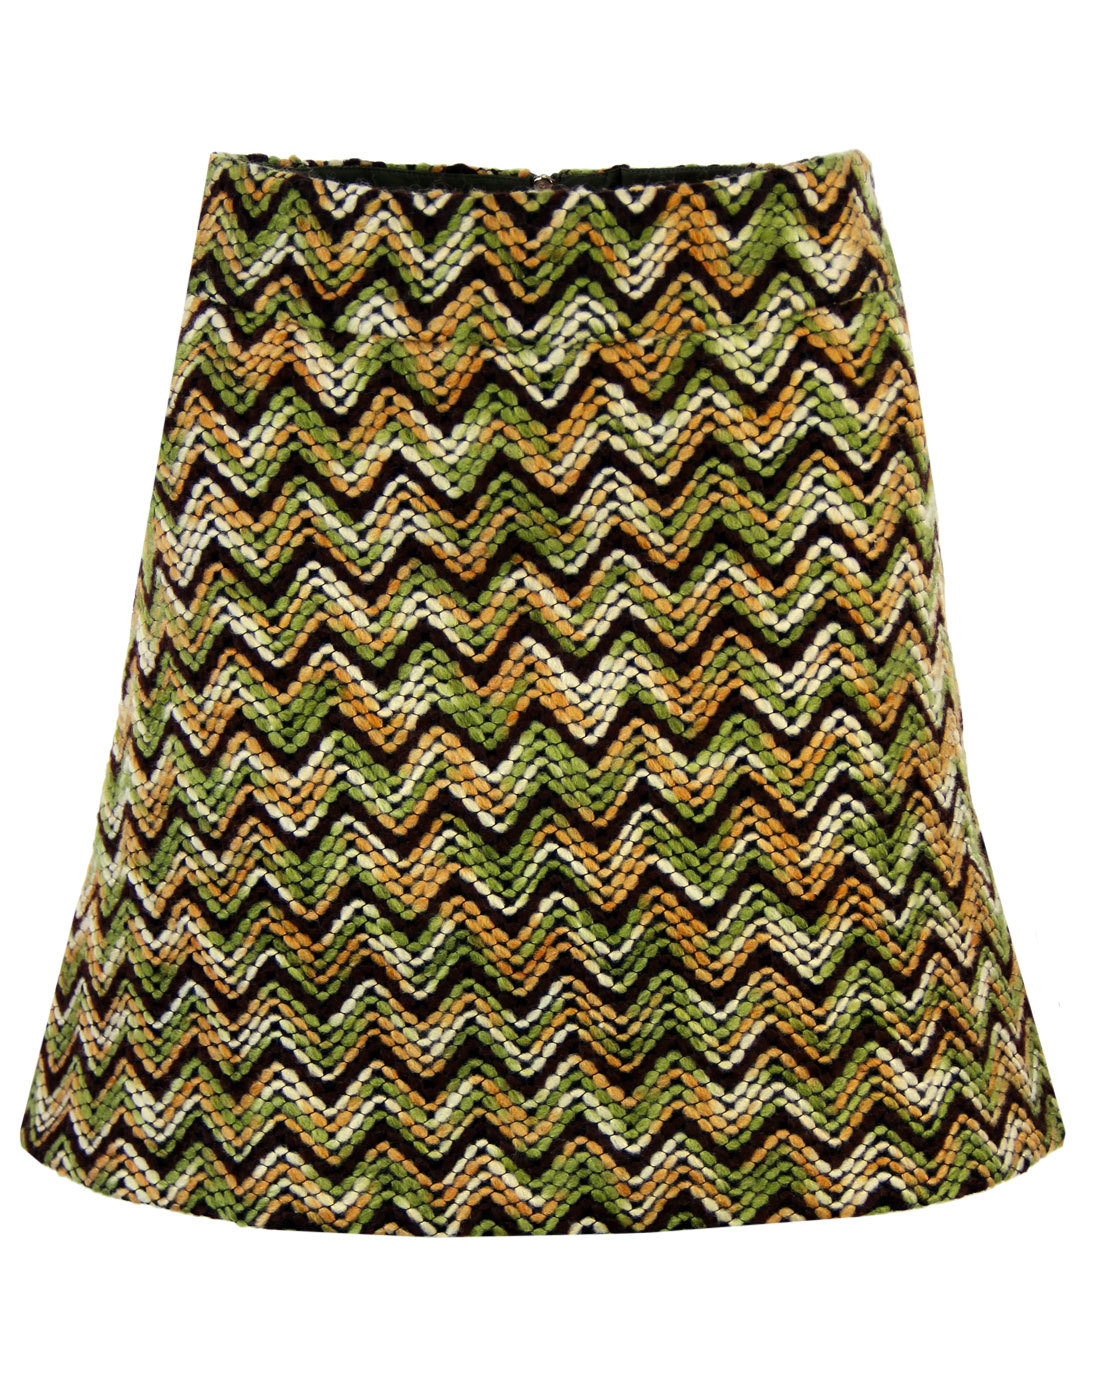 TRAFFIC PEOPLE Retro 70s Woven A-Line Mini Skirt 